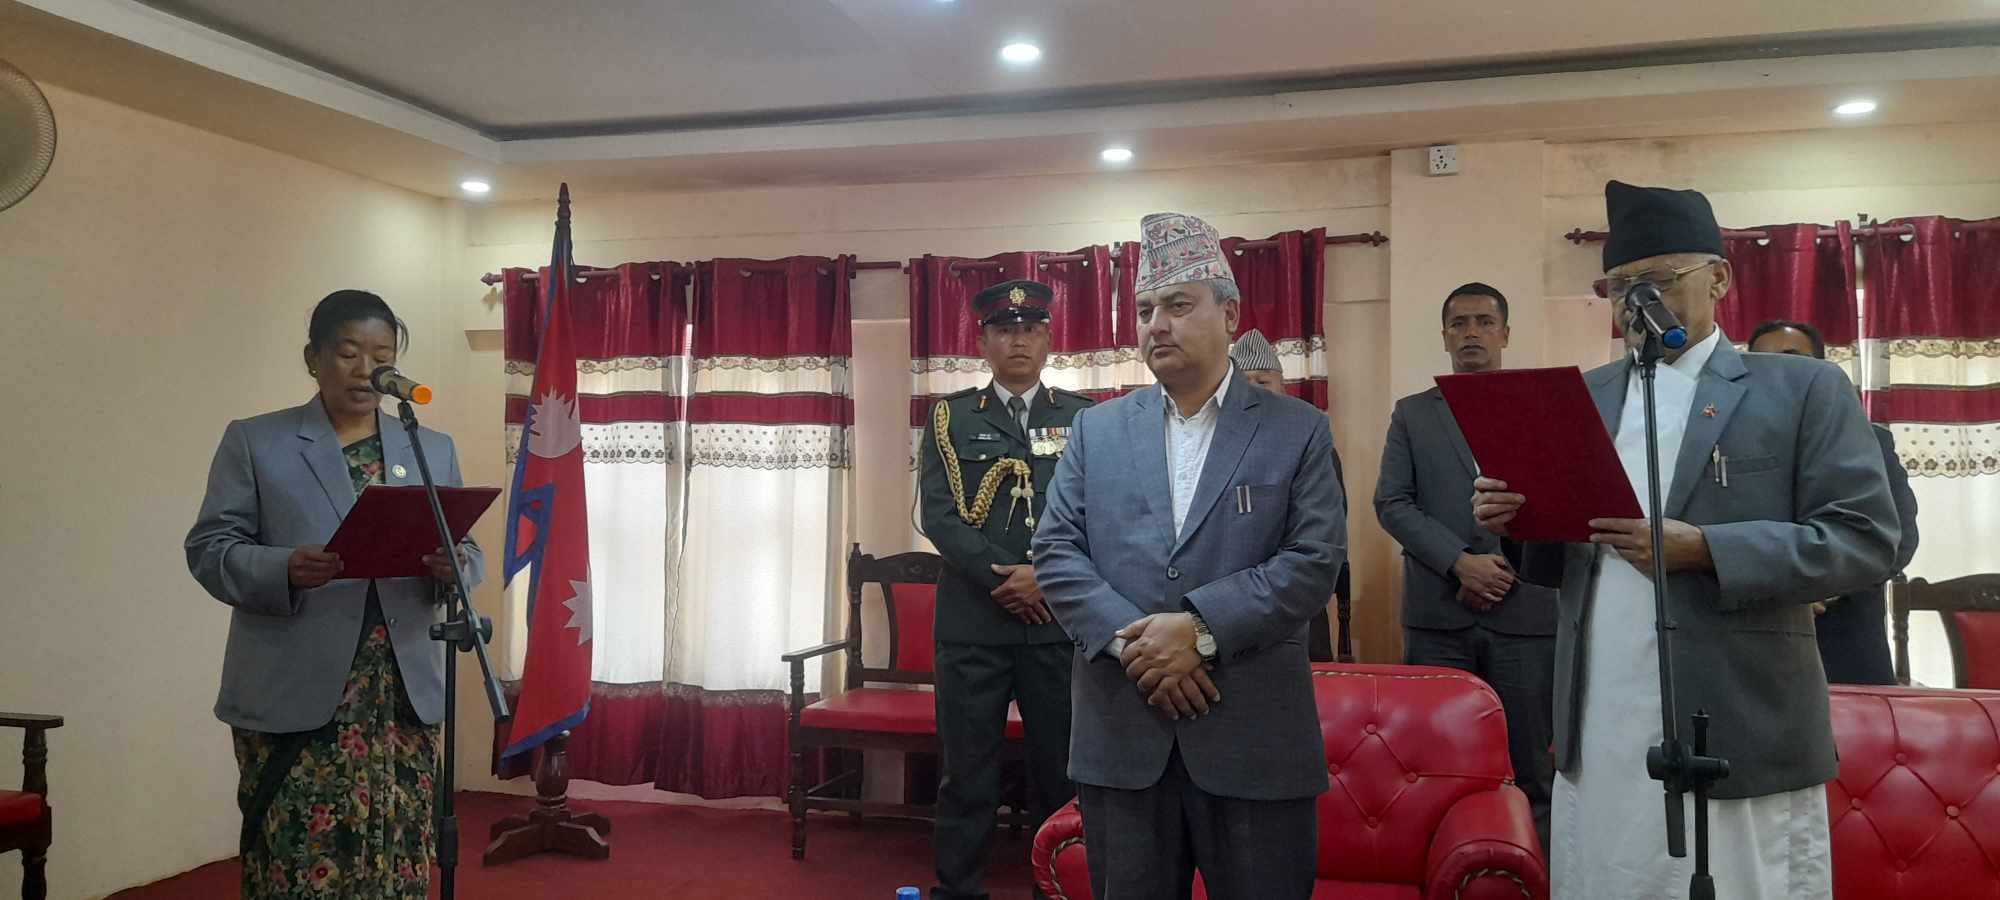 Bagmati CM Jamarkattel expands Cabinet